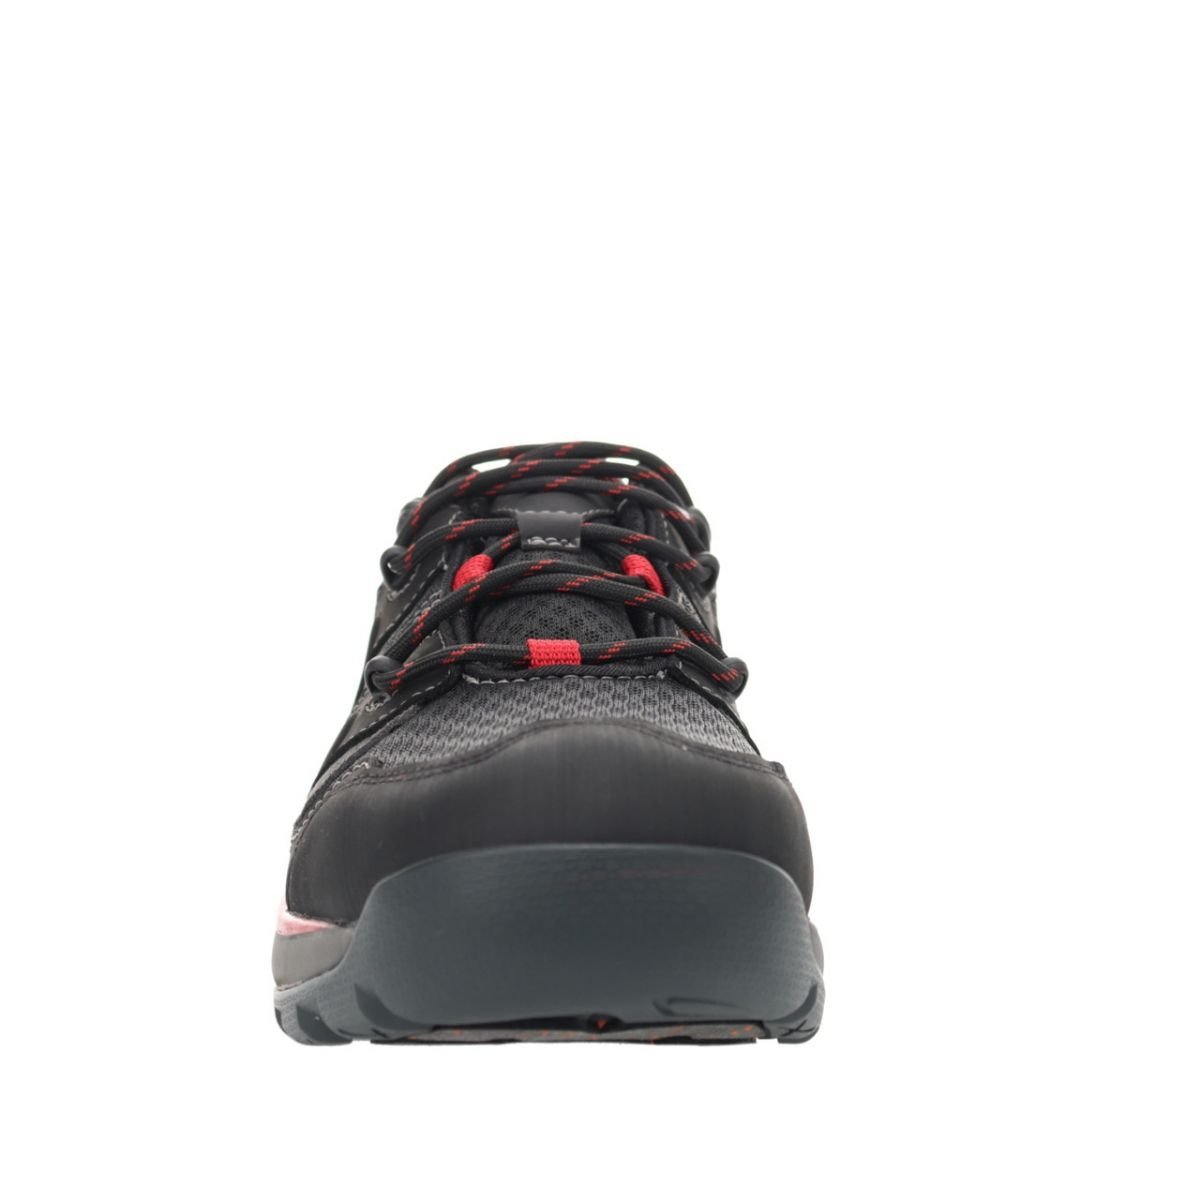 Propet Men's Vercors Hiking Shoe Black/Red - MOA002SBRD BLACK/RED - BLACK/RED, 13